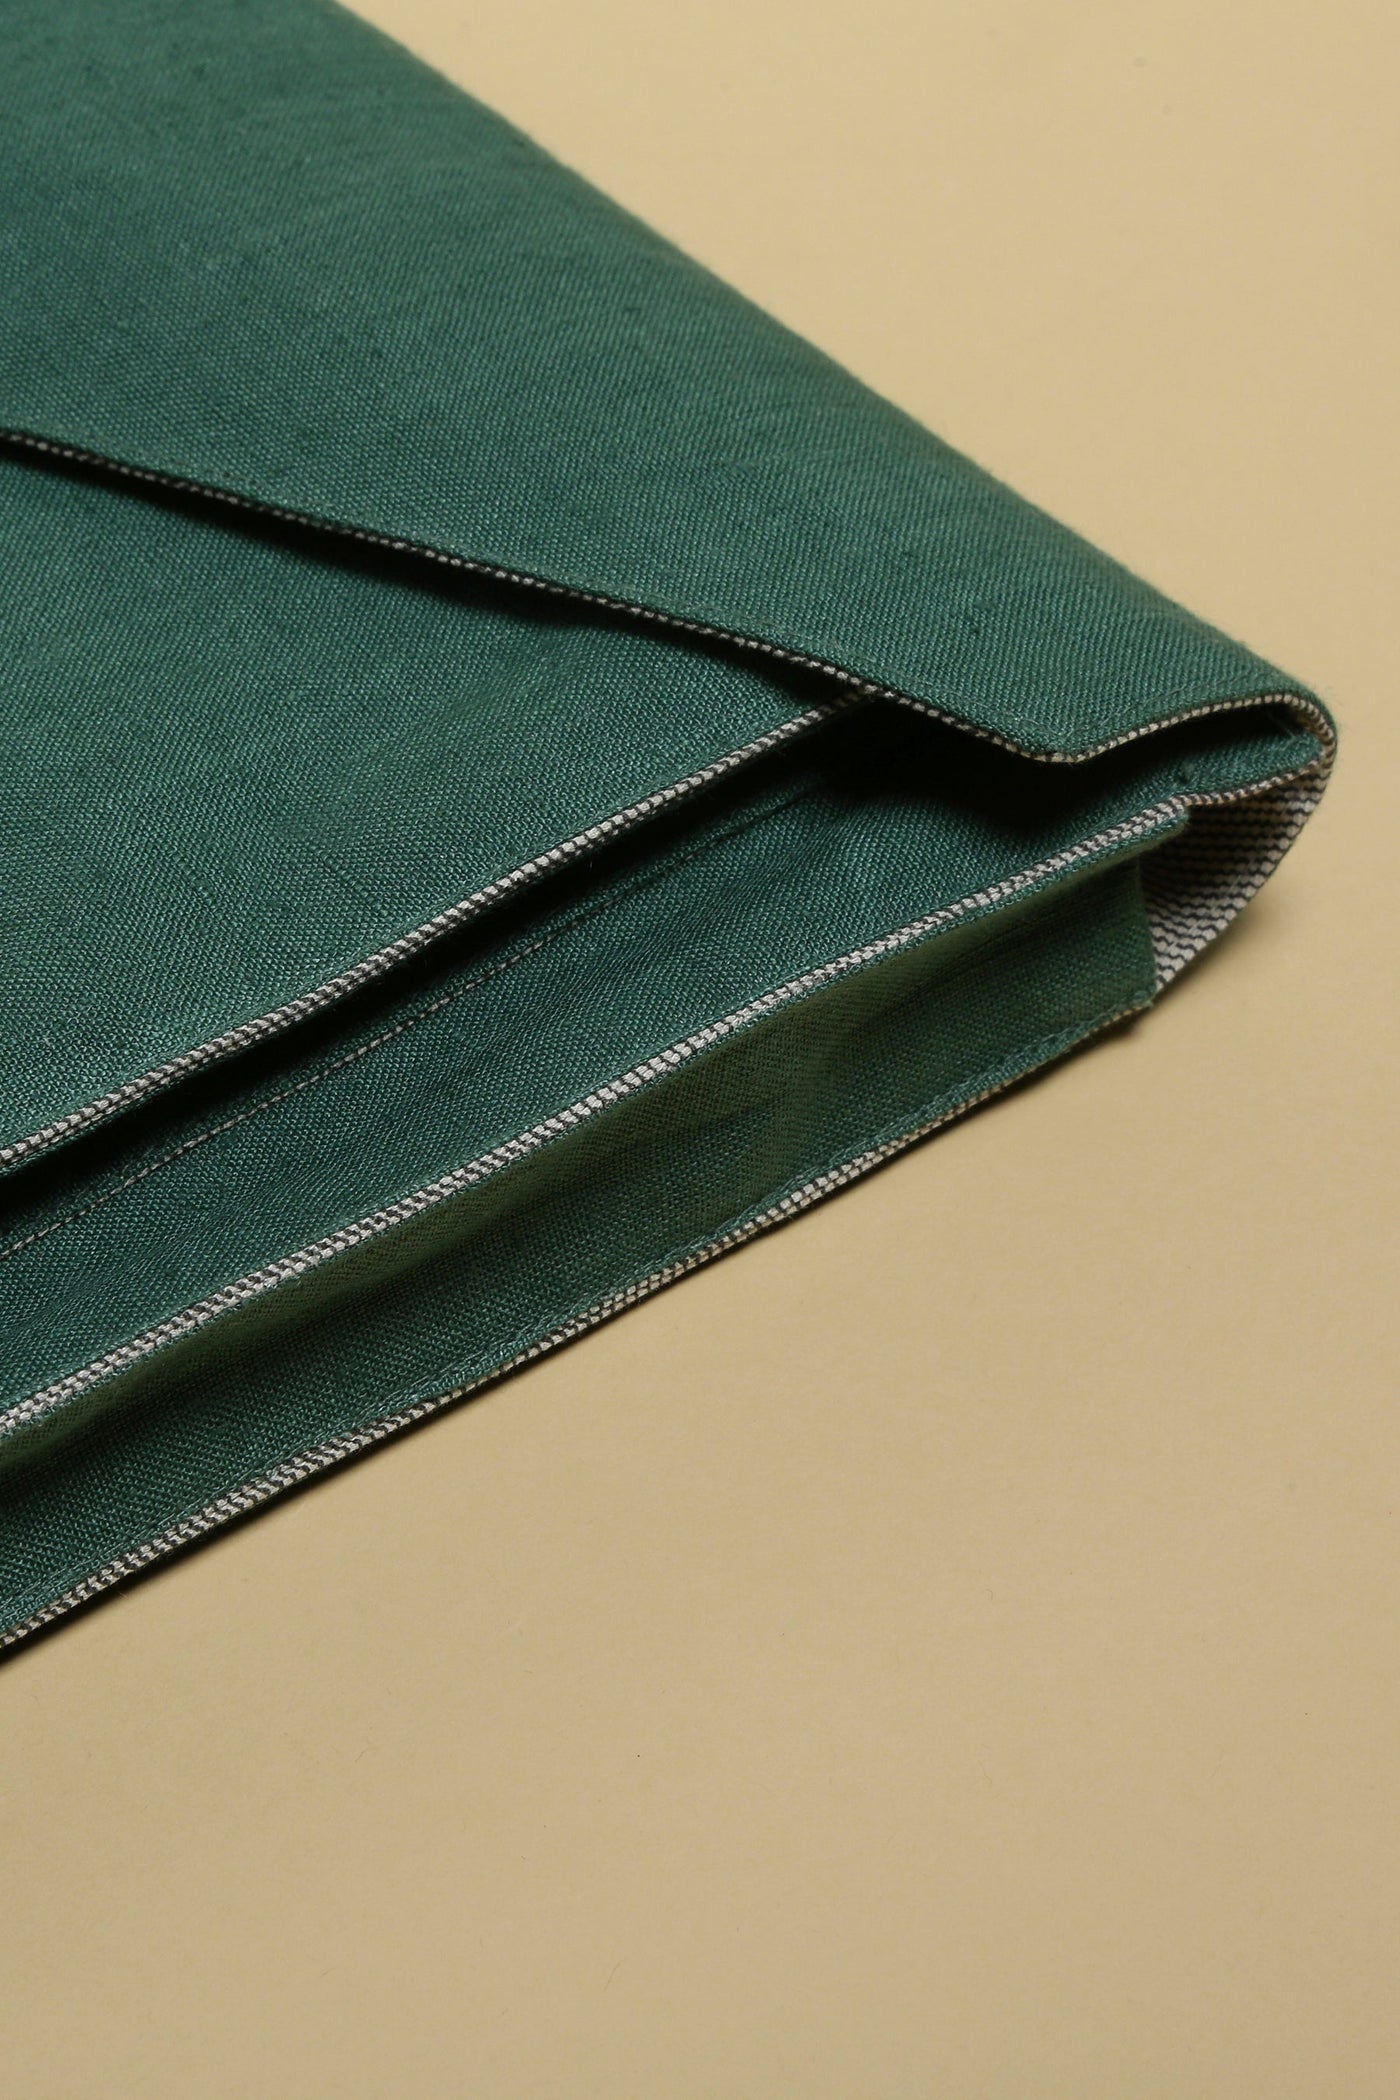 Aloe Laptop/Tablet Sleeve